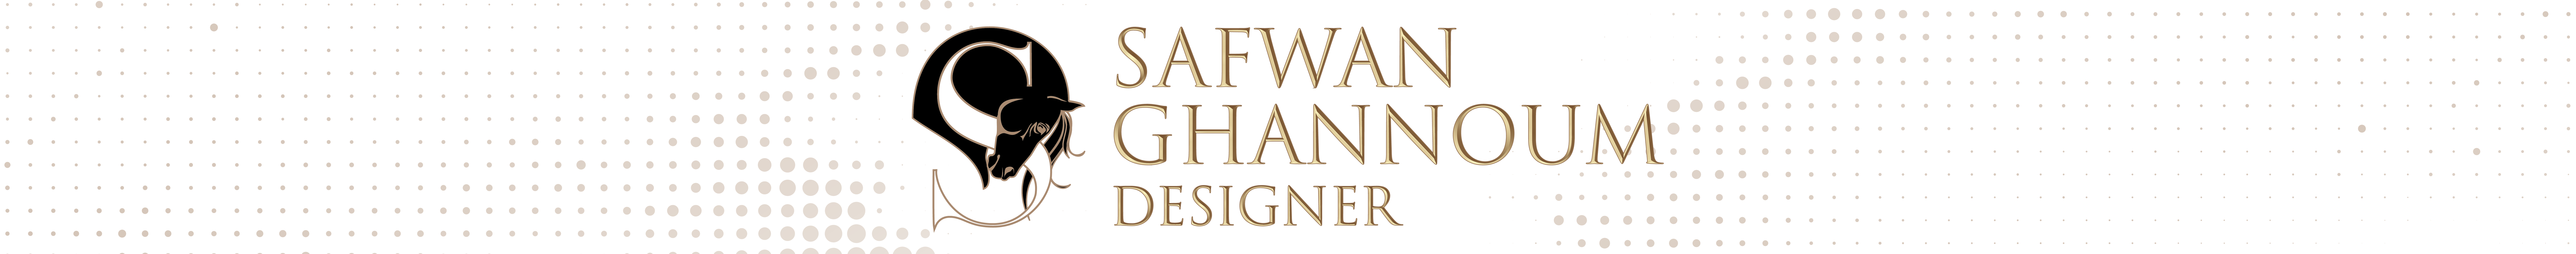 Profielbanner van Safwan Ghannoum